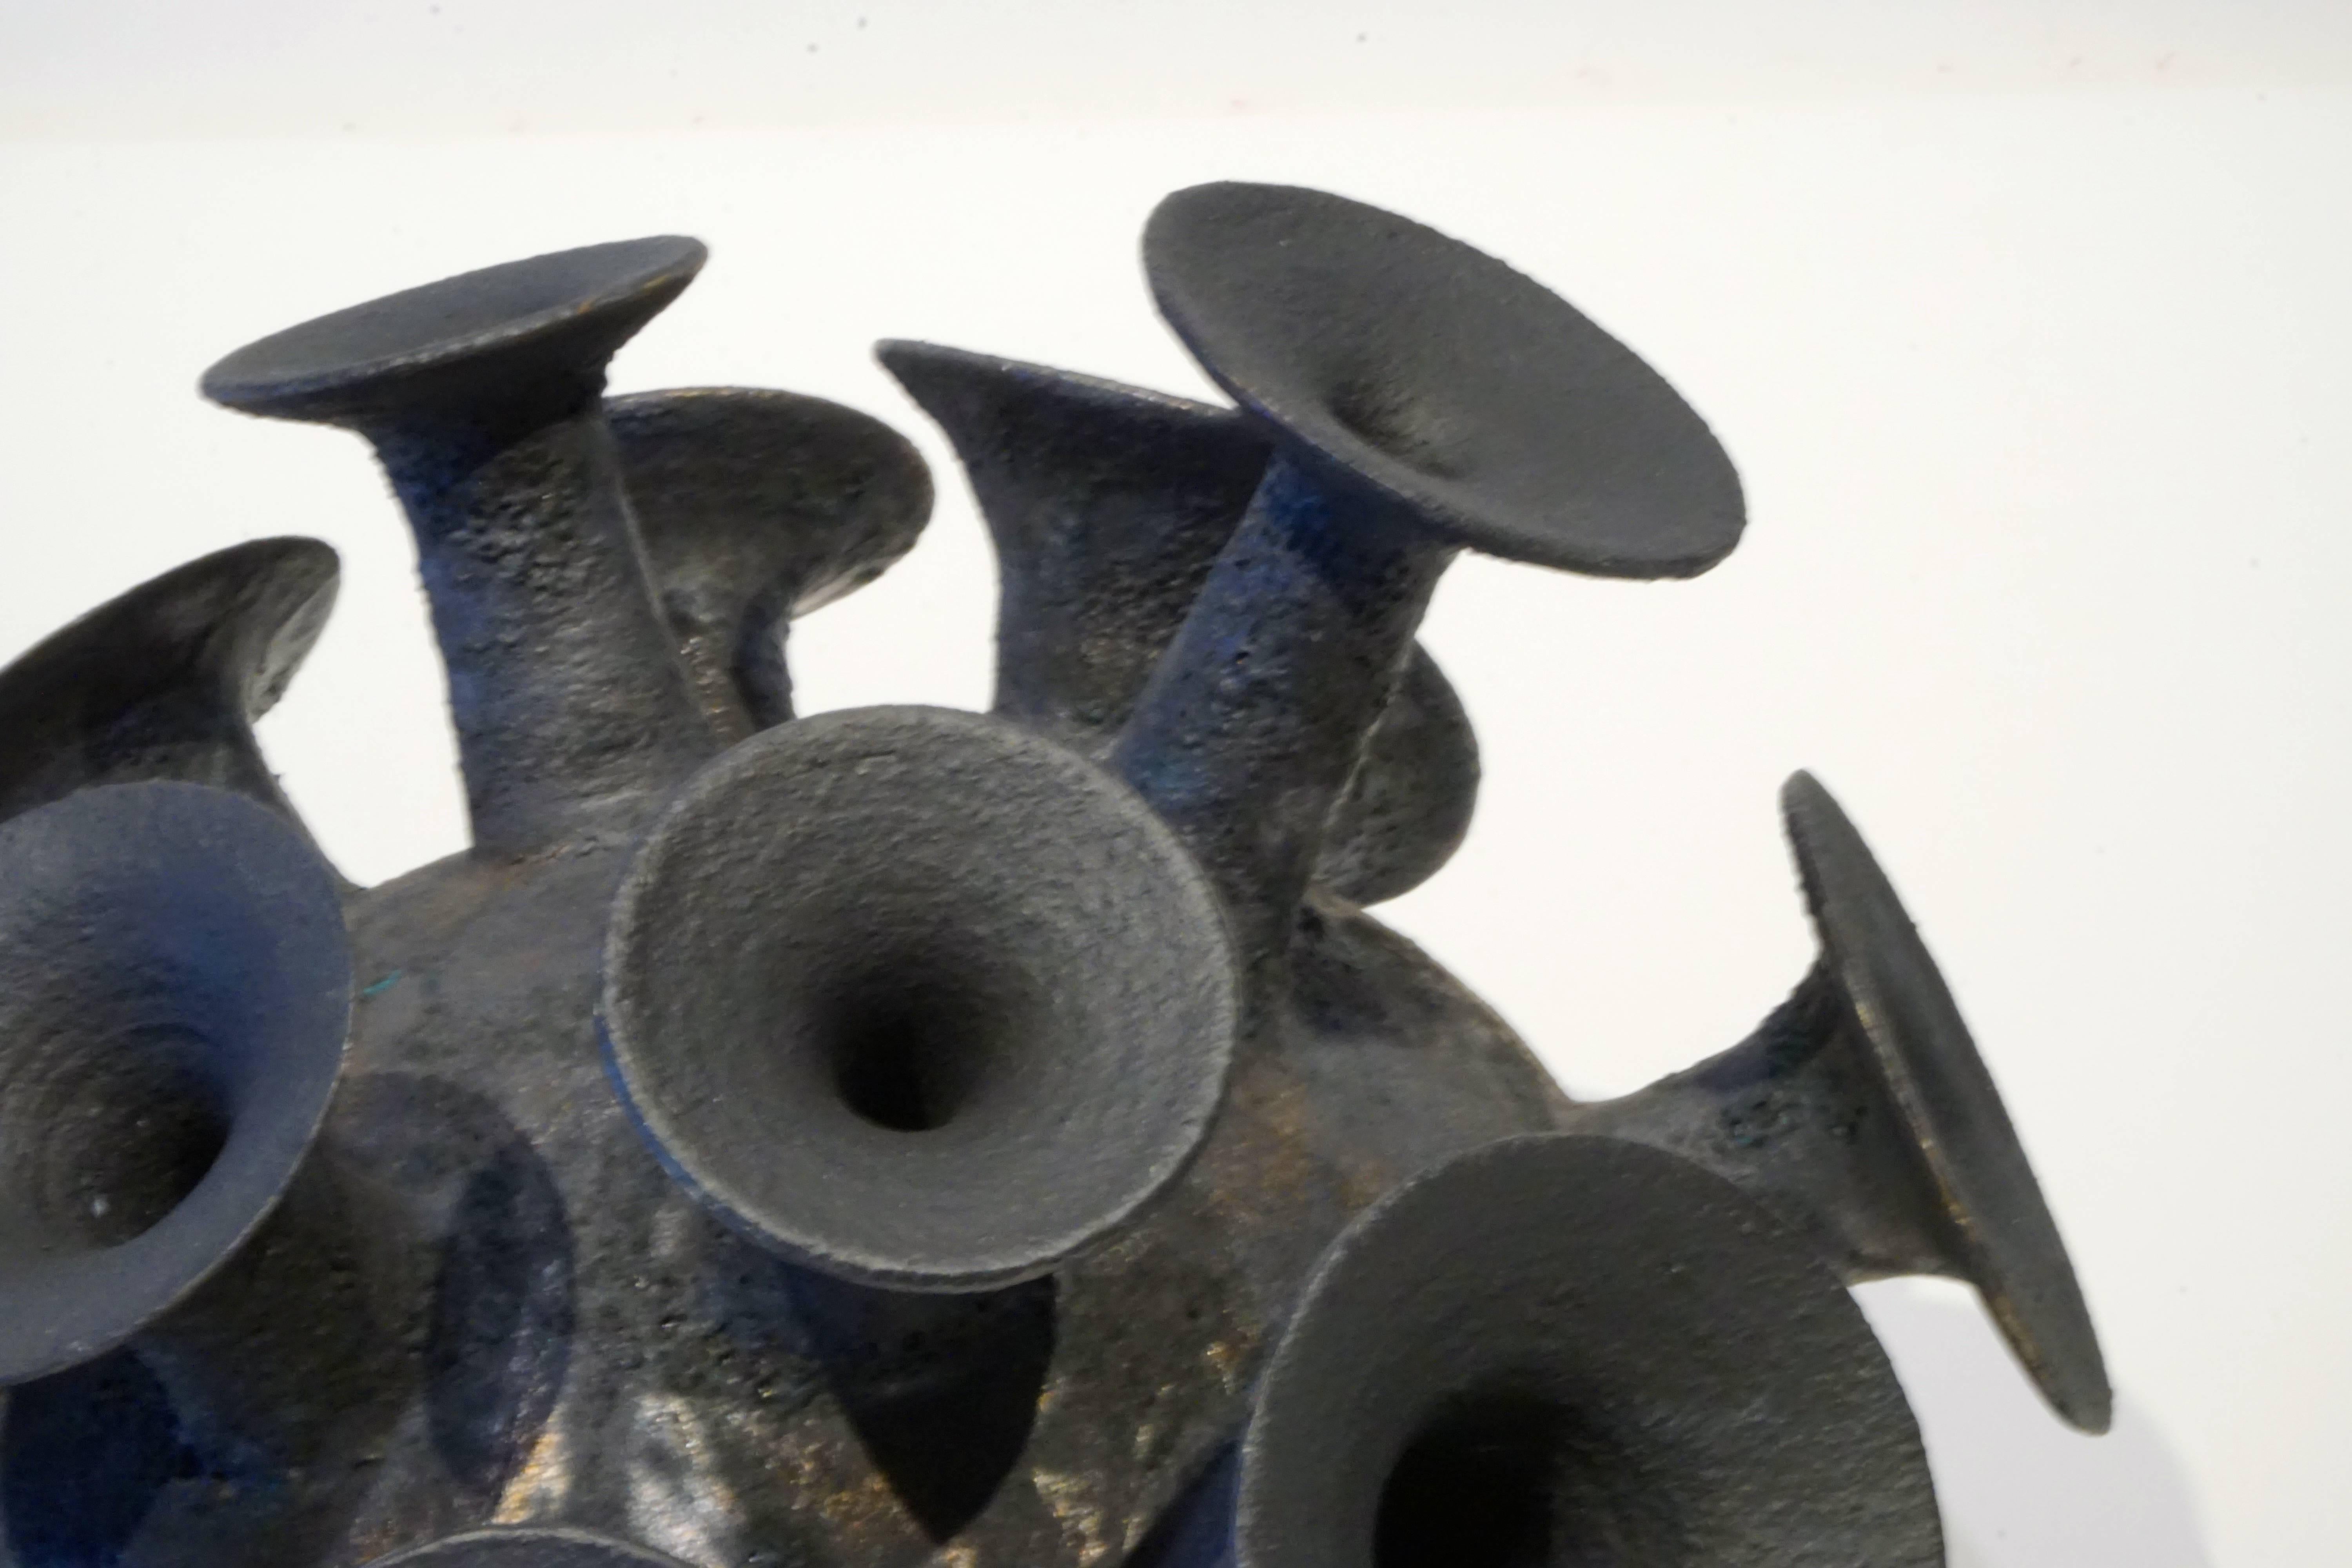 American Multi Spout Ceramic Vessel Sculpture by Studio Potter Jeremy Gercke, 2016